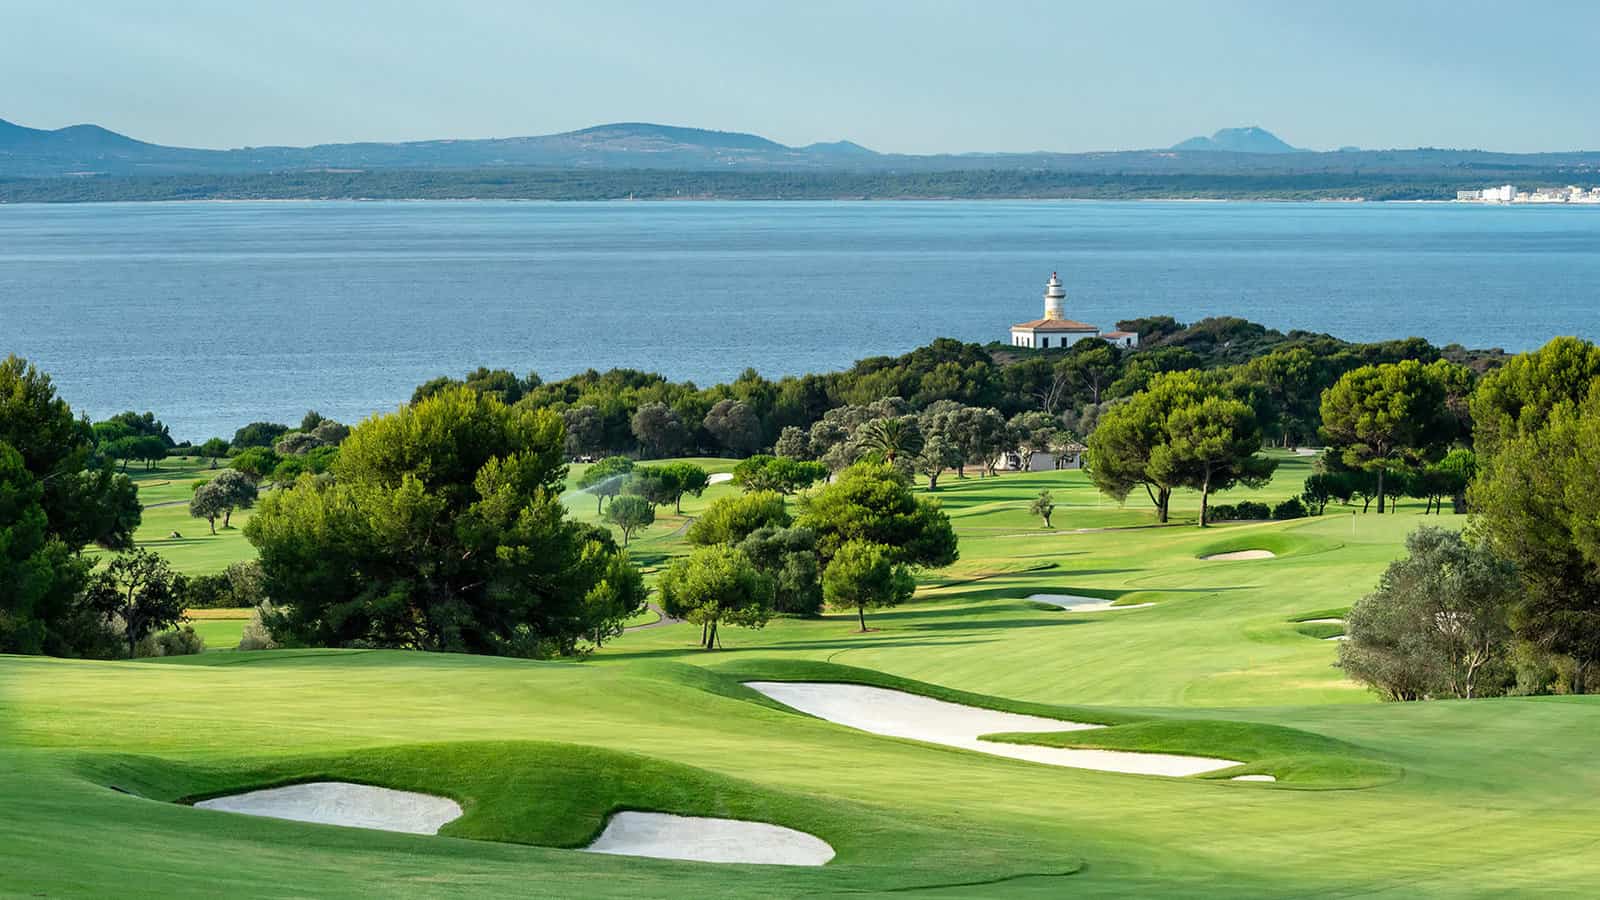 Mallorca et paradis for golfere året rundt